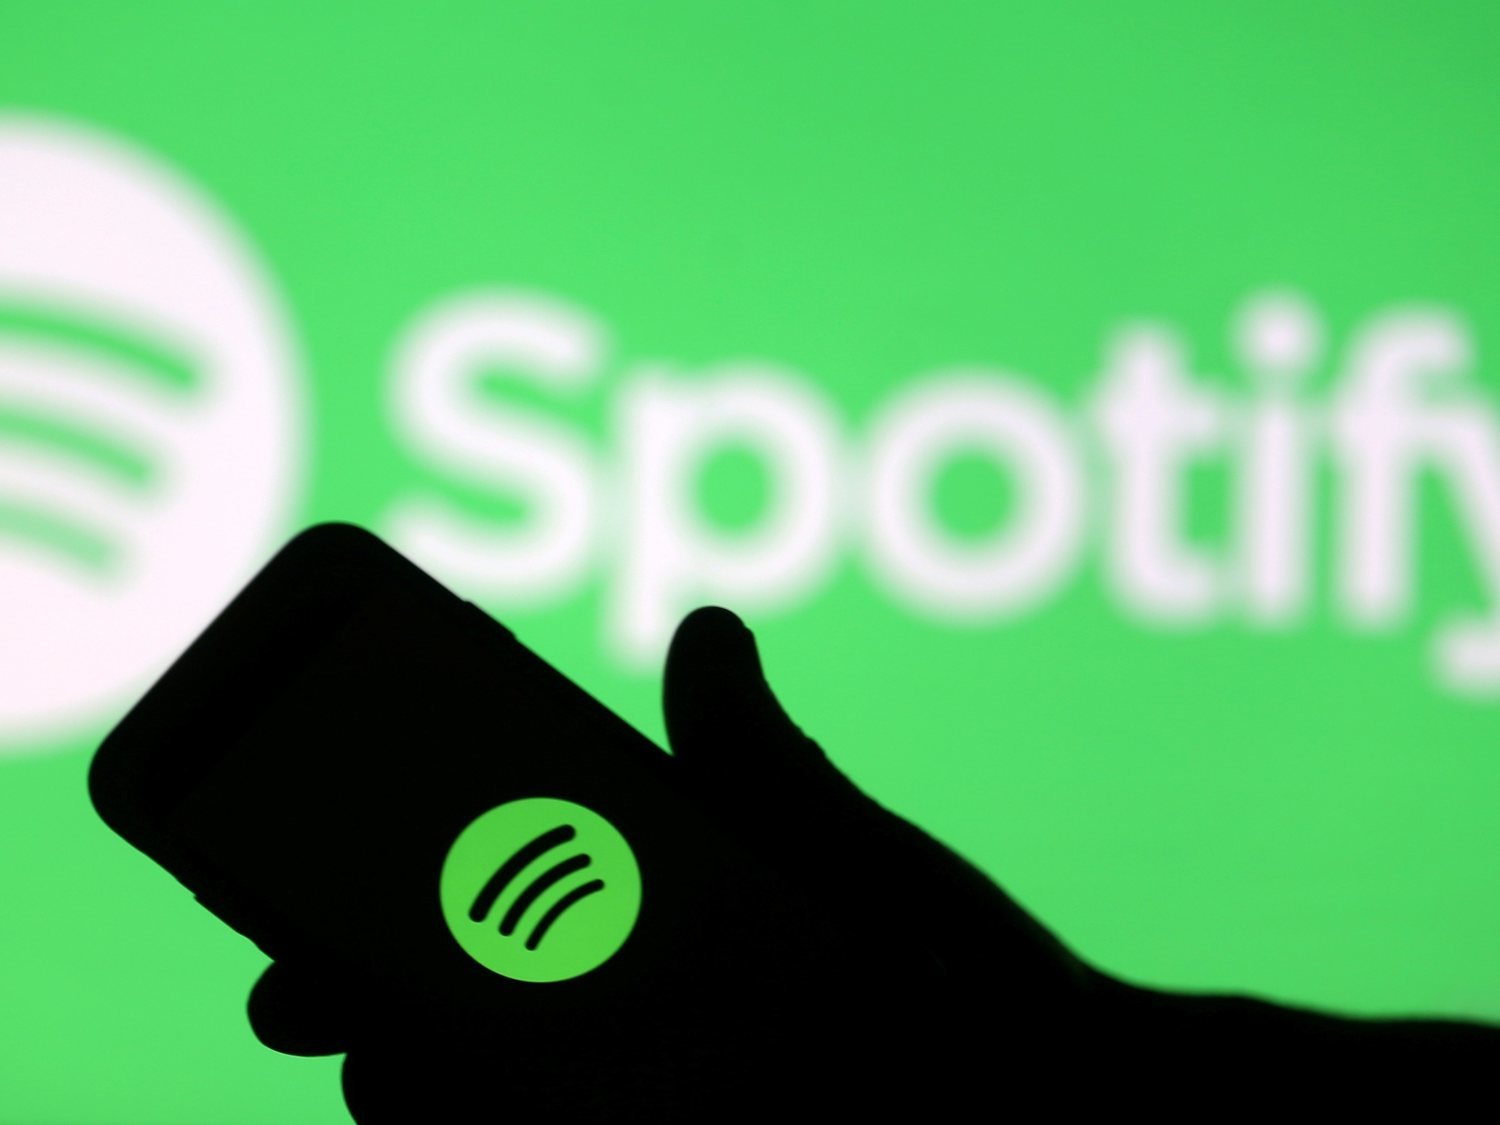 ¿Cuánto gana un artista por las escuchas en Spotify?